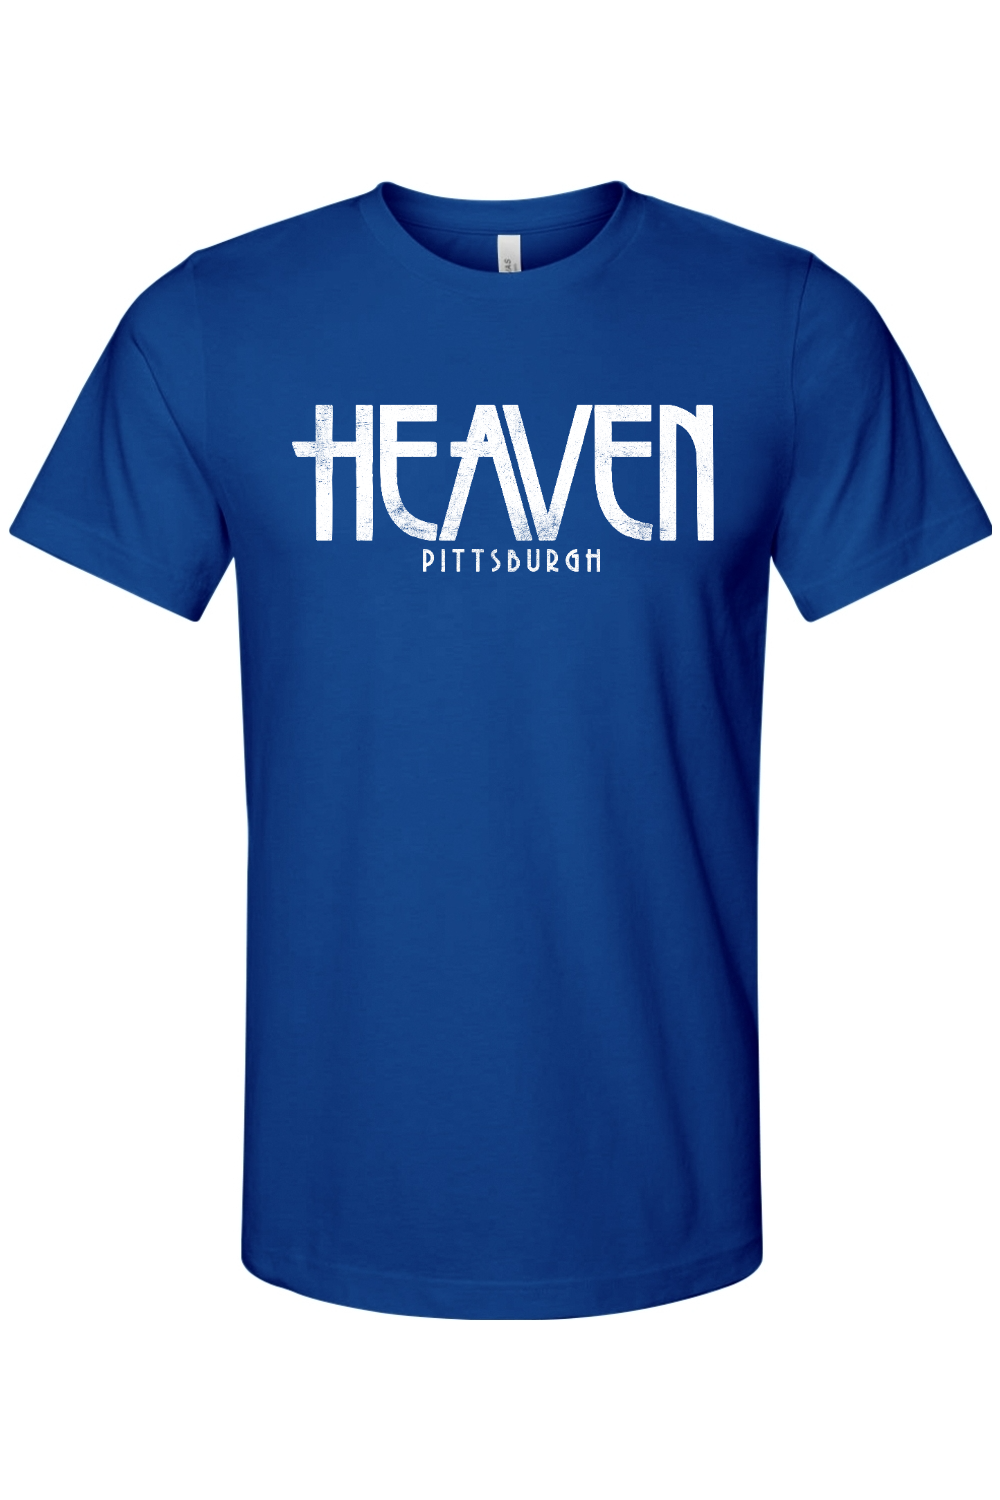 Heaven Night Club - Pittsburgh - Yinzylvania